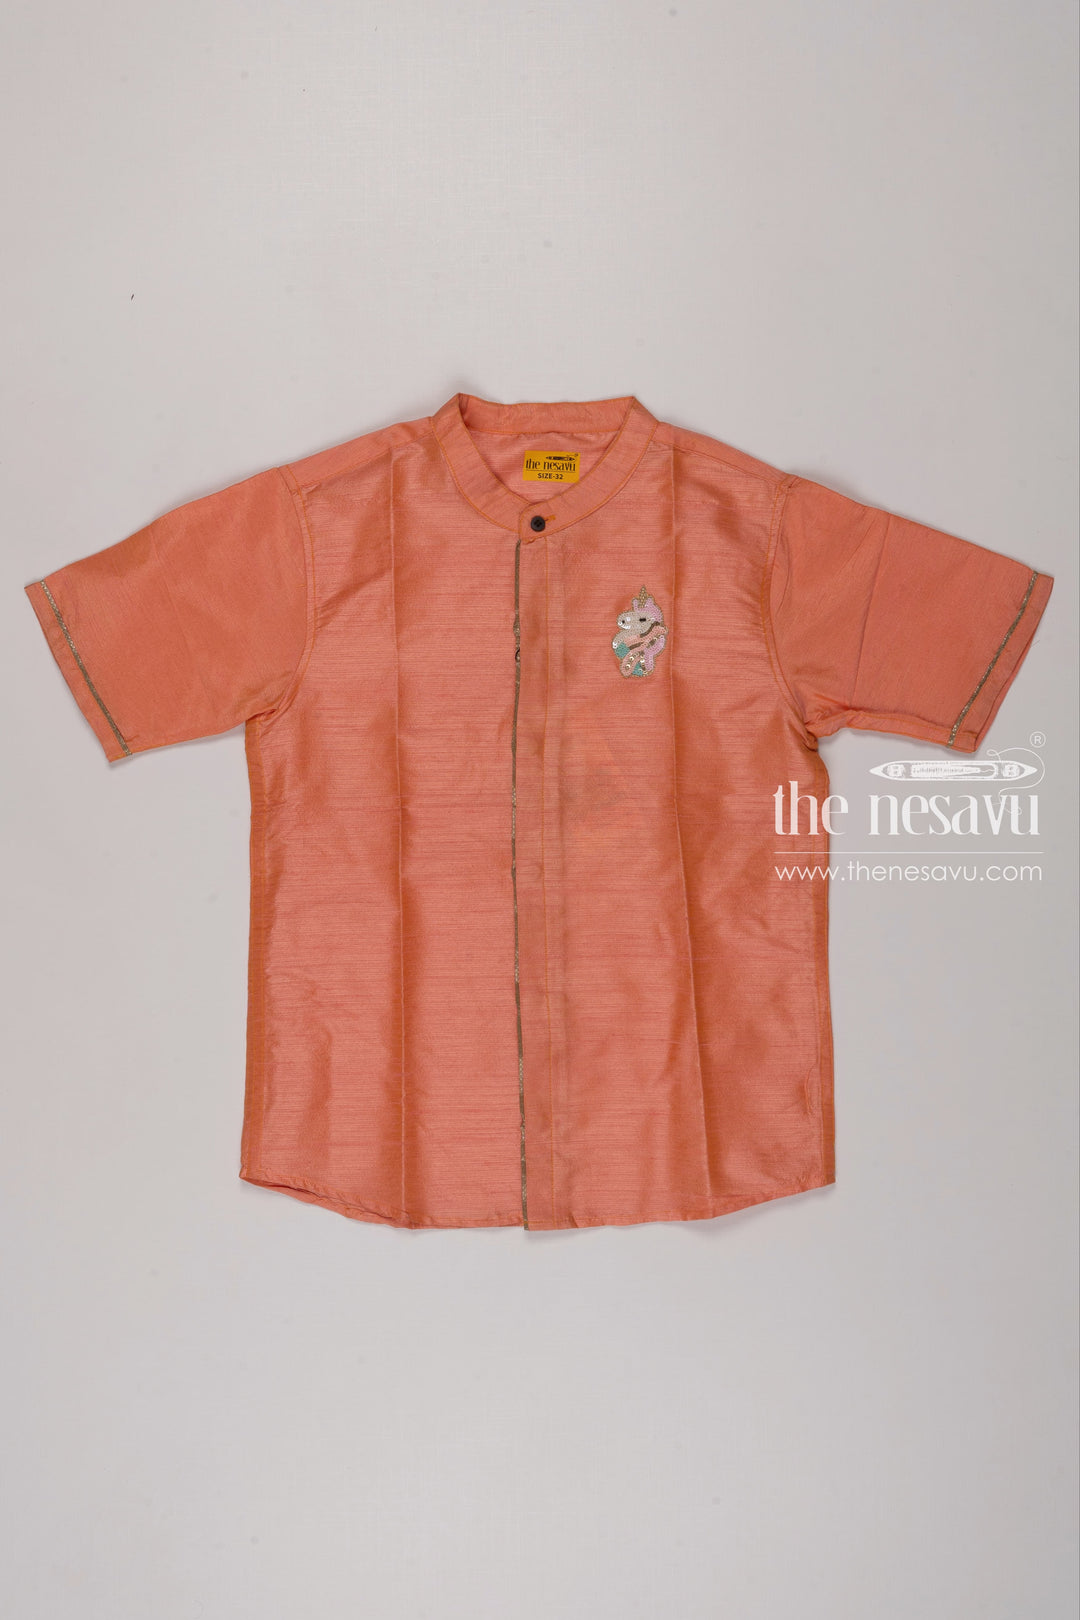 The Nesavu Boys Silk Shirt Salmon Silk Kids Boys Shirt with Elegant Horse Motif Nesavu 16 (1Y) / Salmon / Blend Silk BS109A-16 Boys Silk Shirt | Traditional Elephant Design | The Nesavu Collection